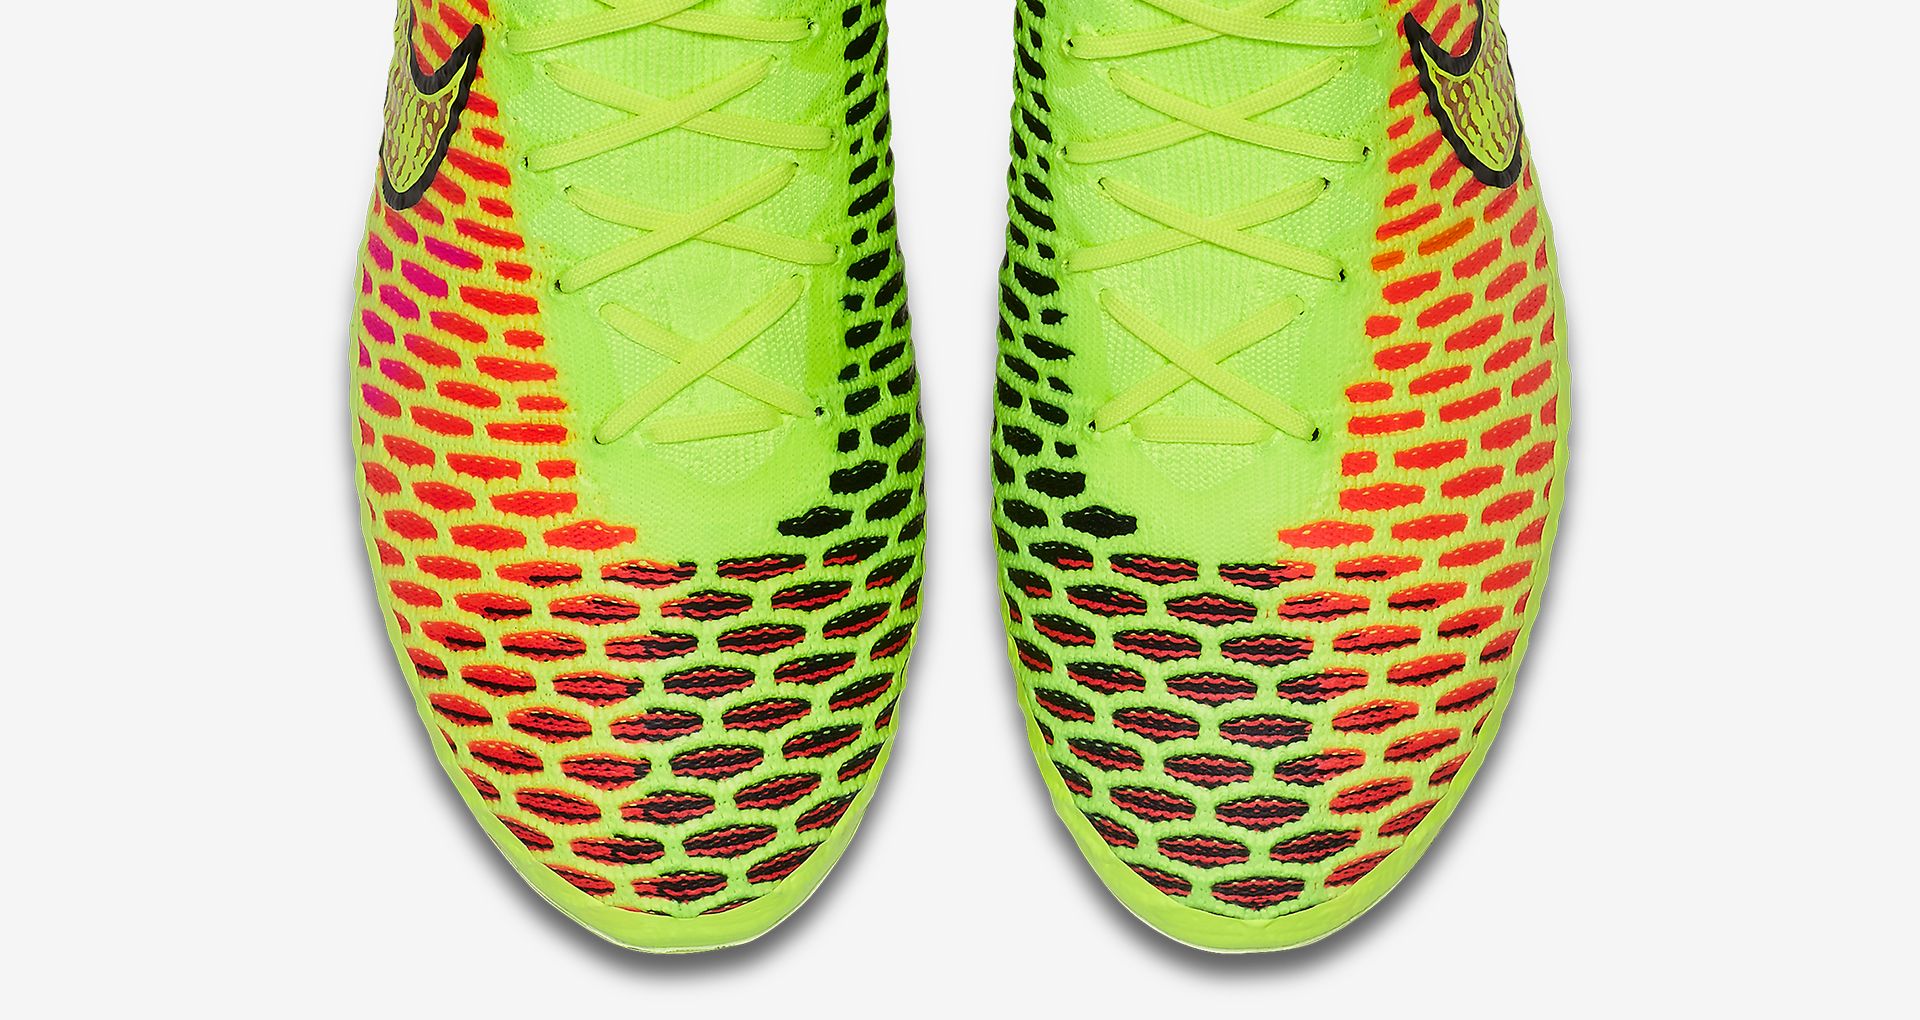 Nike Magista Obra 2 Elite DF AG Pro Size 8.5 Soccer Cleat